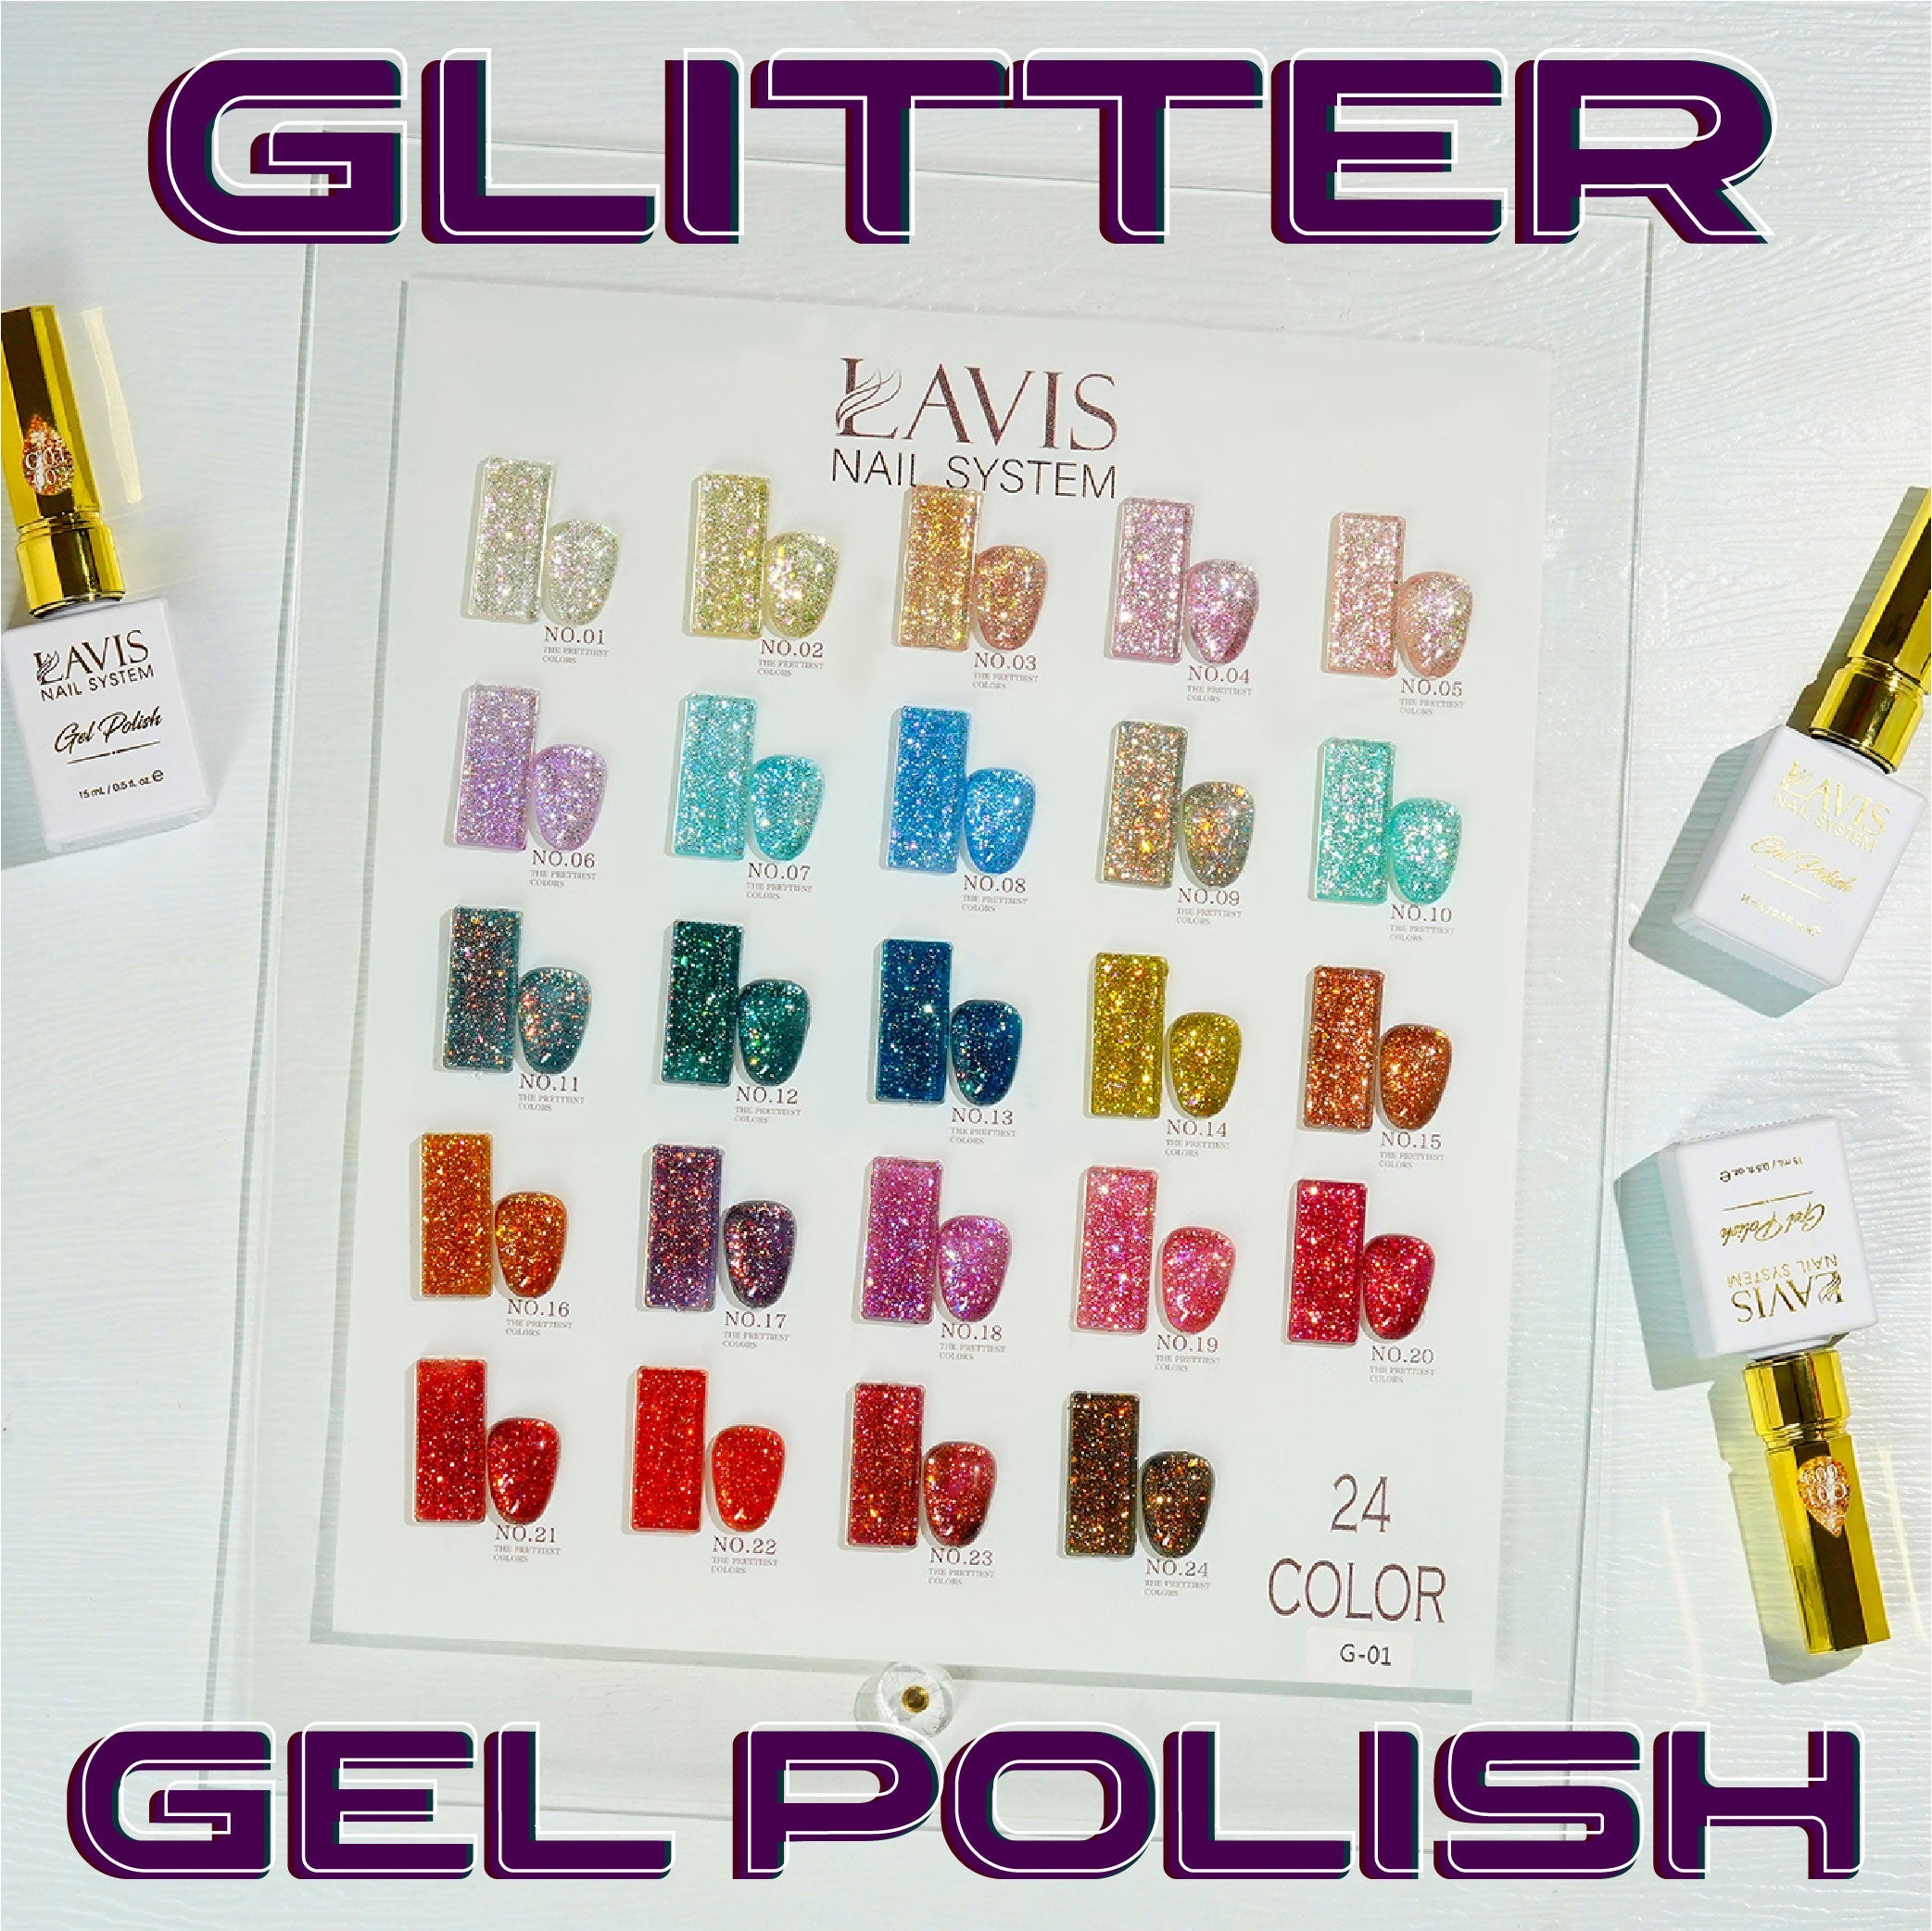 LAVIS Glitter G01 - 20 - Gel Polish 0.5 oz - Galaxy Collection